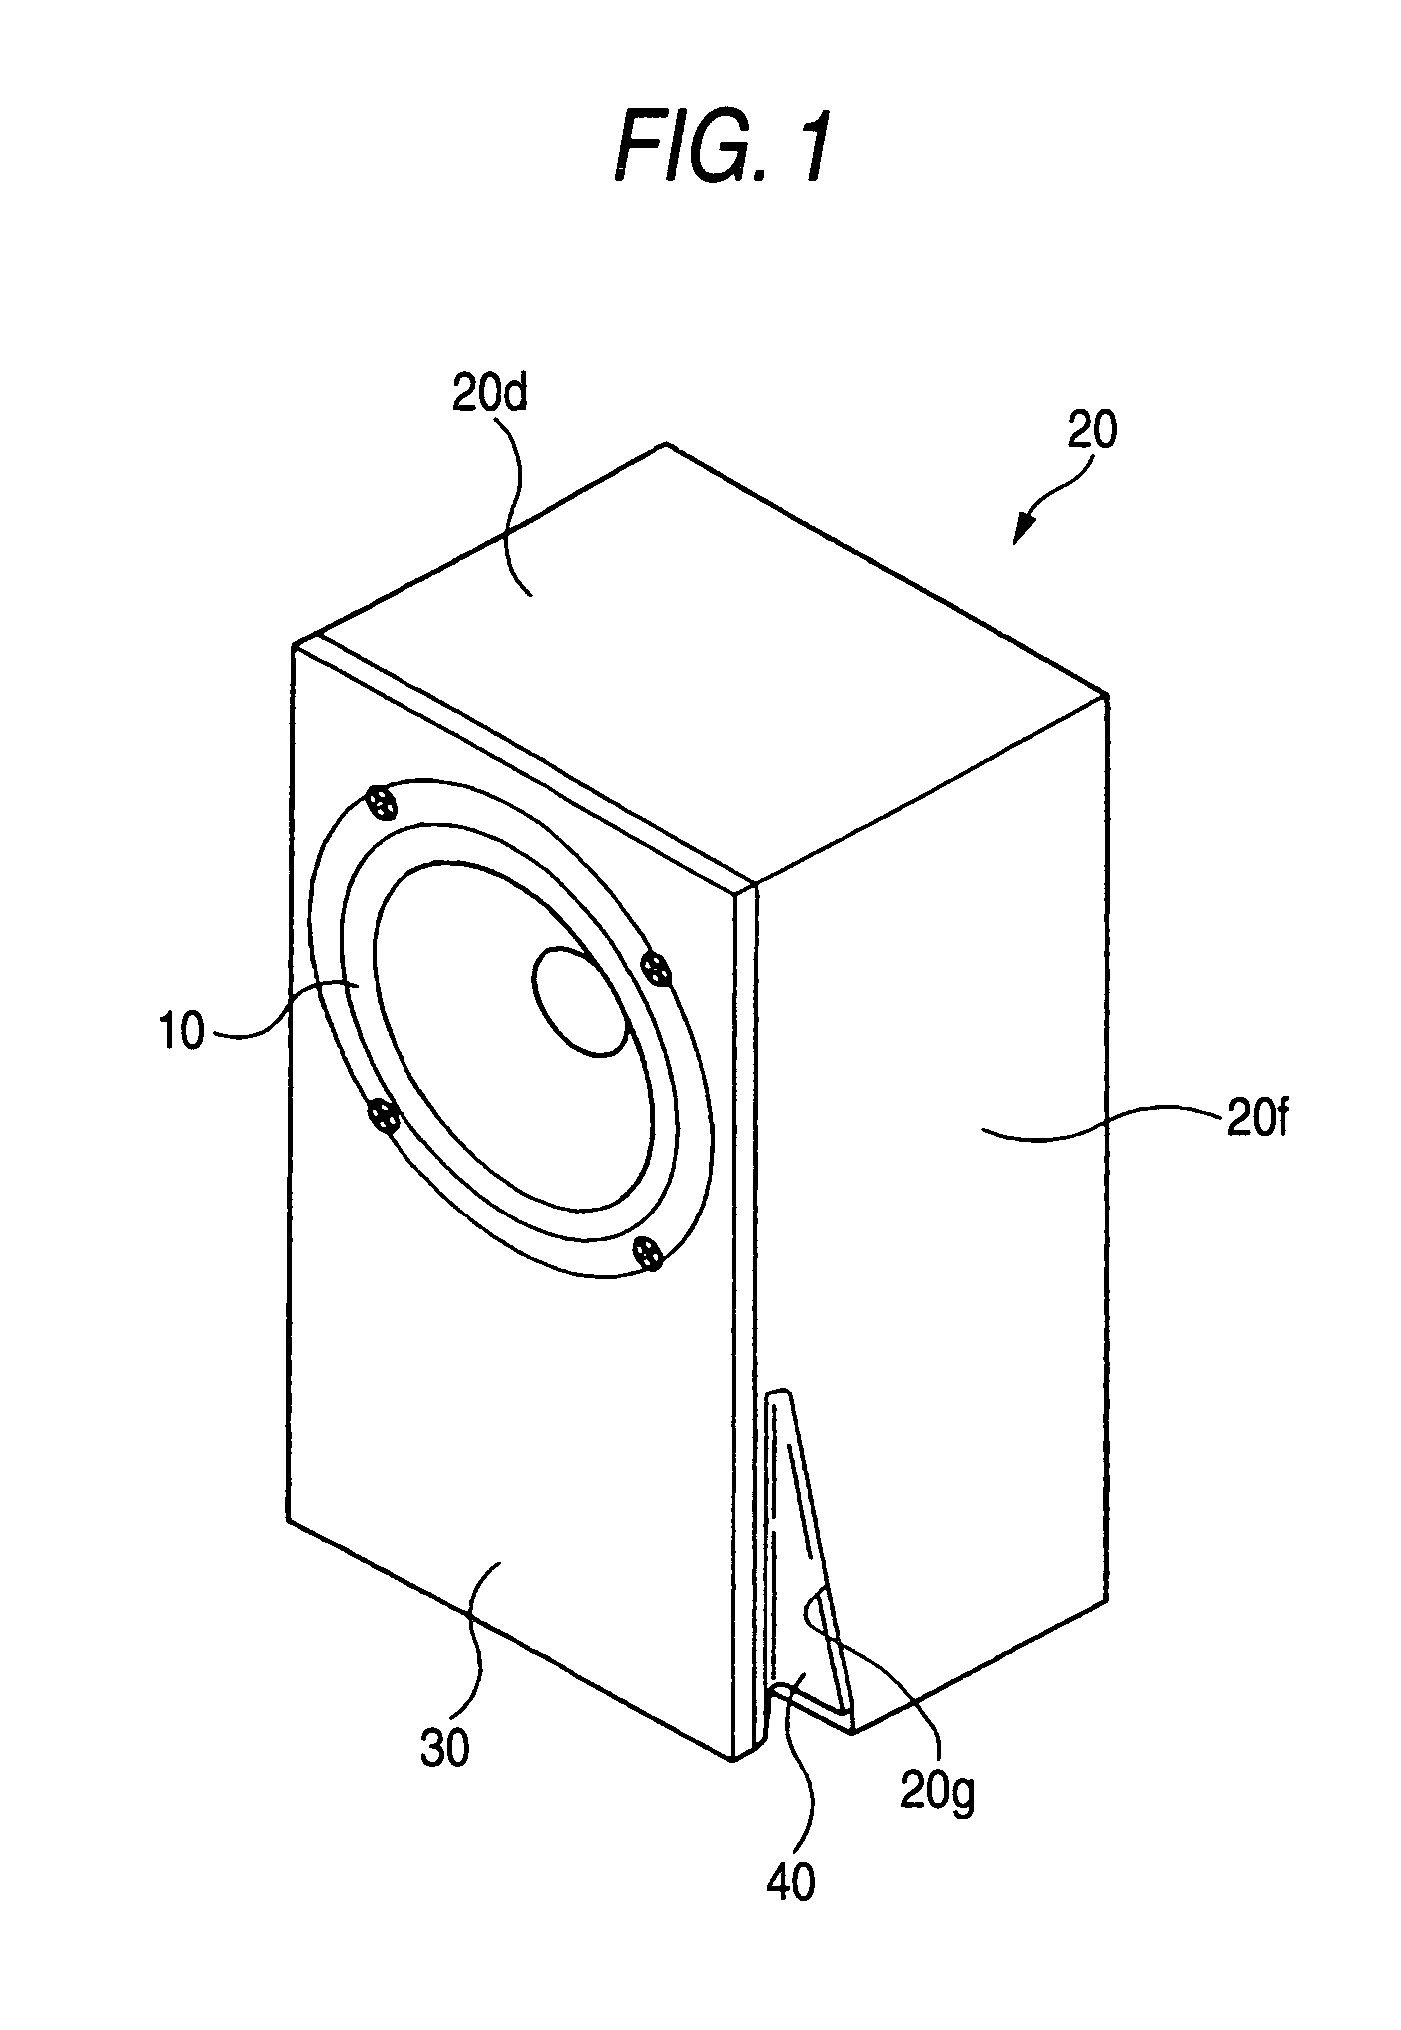 Speaker system and speaker enclosure